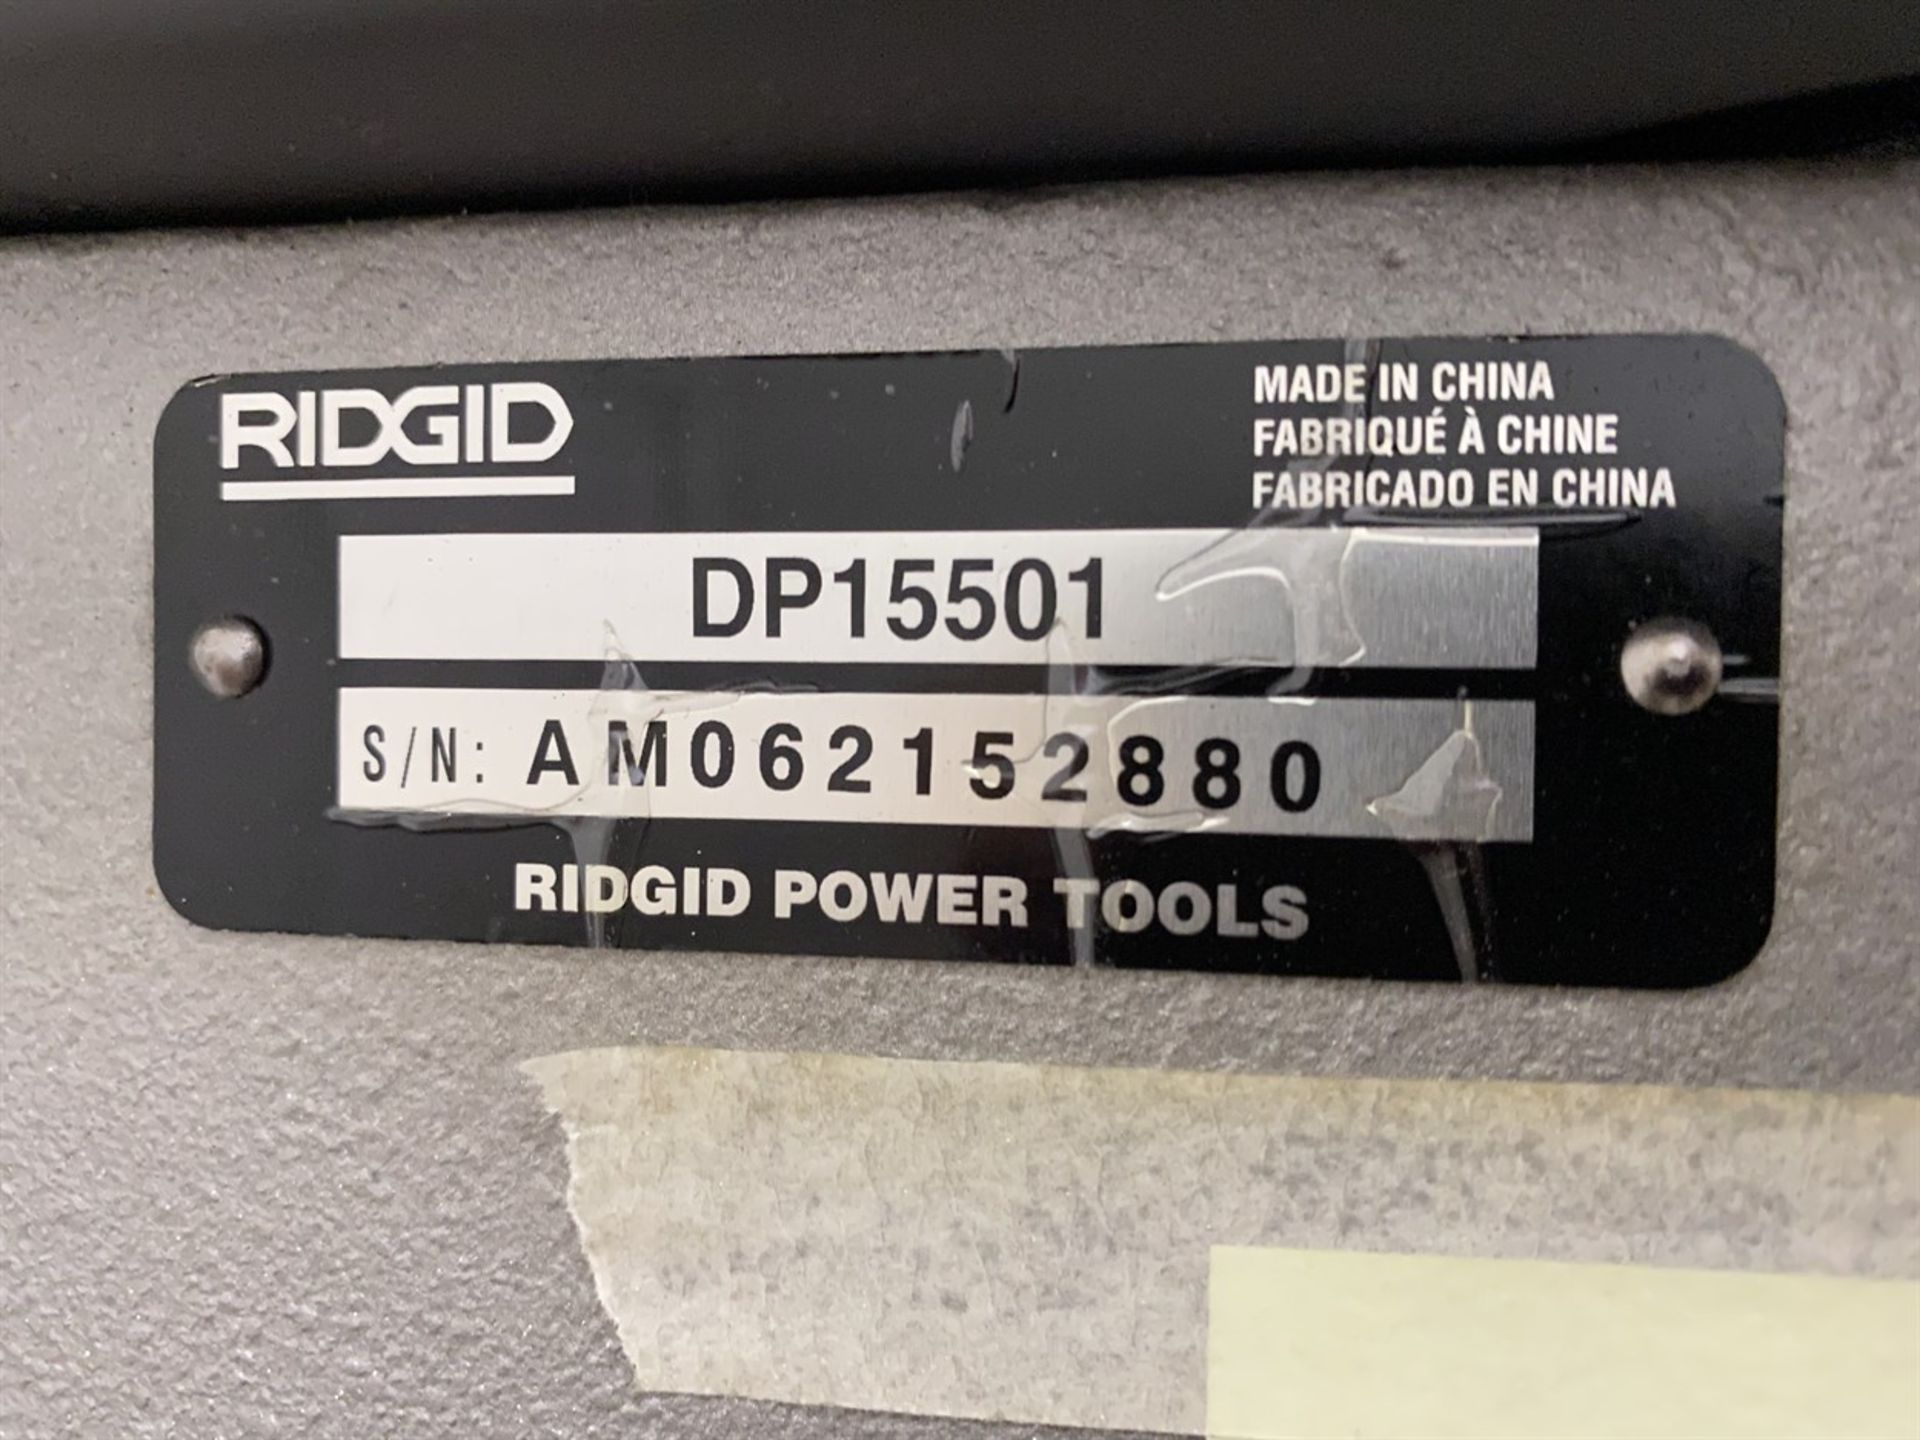 RIDGID DP15501 Drill Press, s/n AM062152880, w/ Heinrich Pneumatic Vise - Image 4 of 4